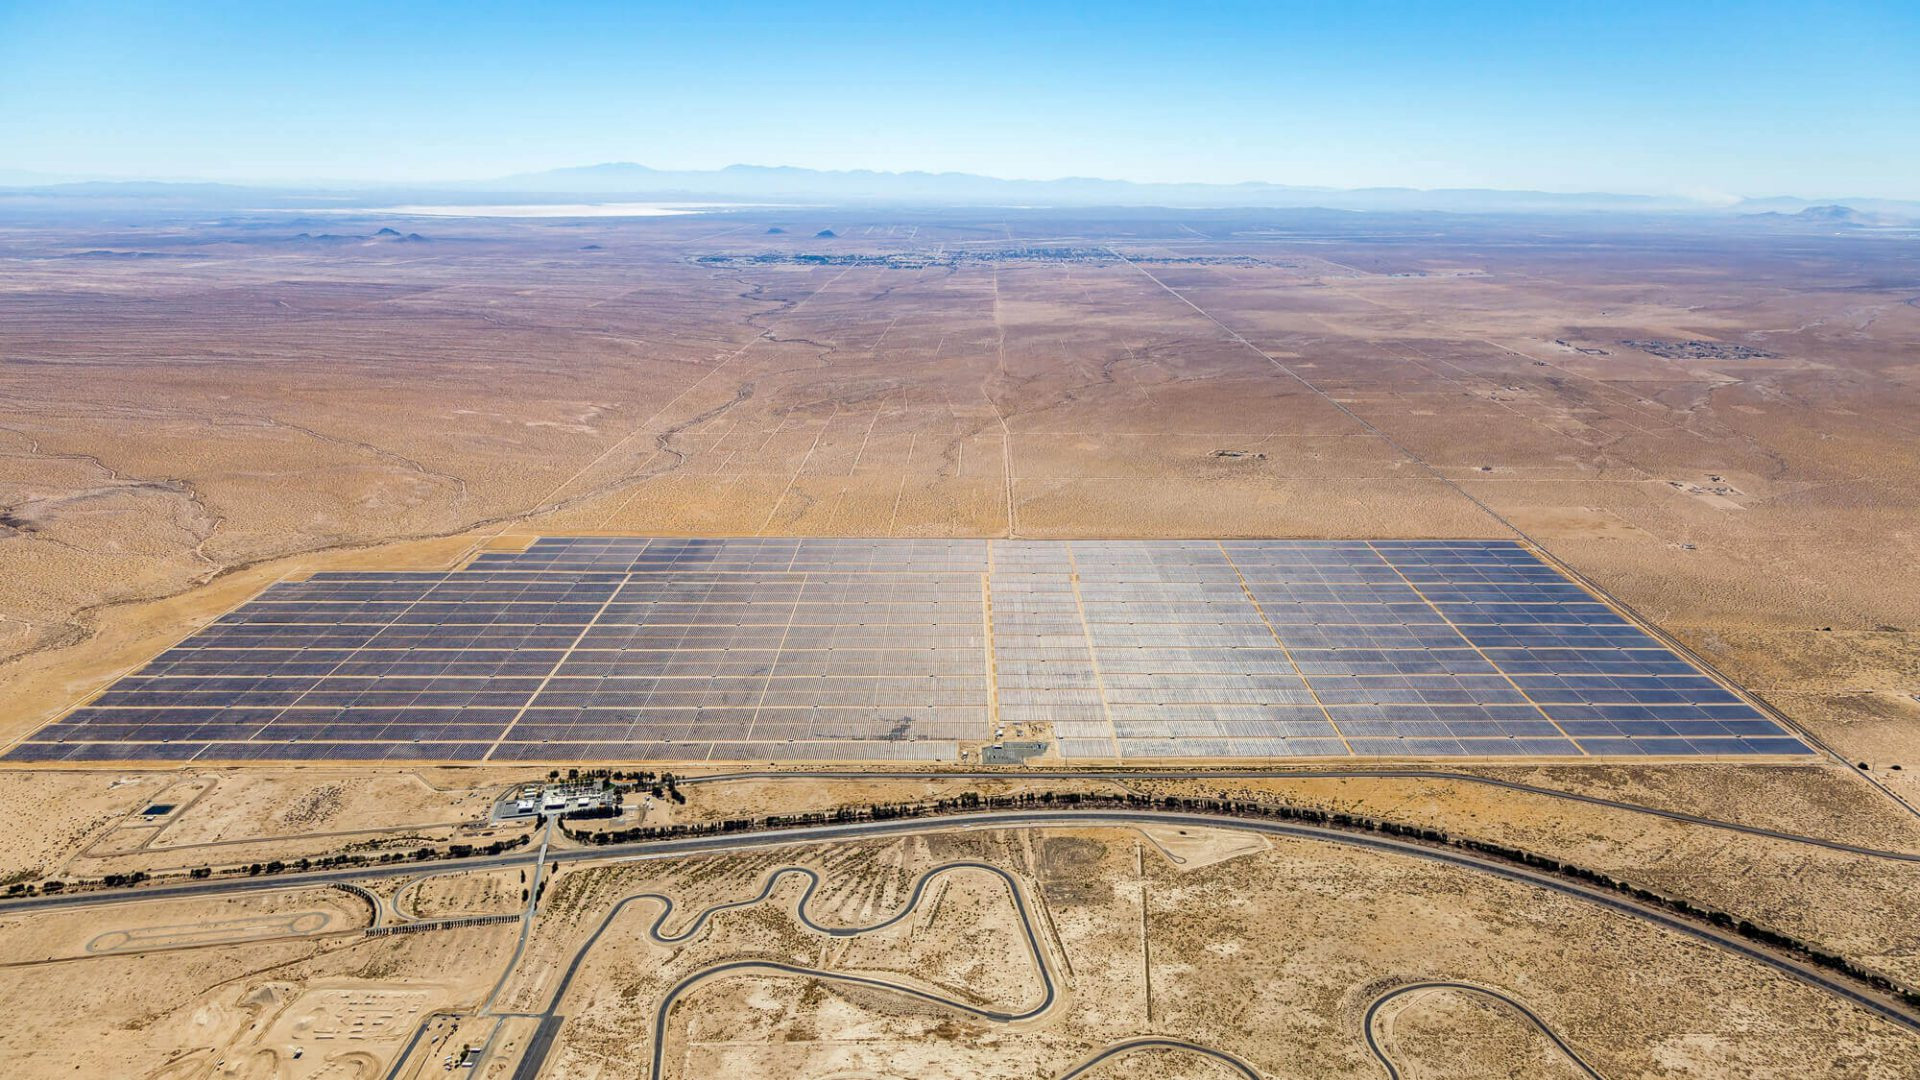 Desert aerial drone view of Springbok solar farm between a racetrack & mountains in California.